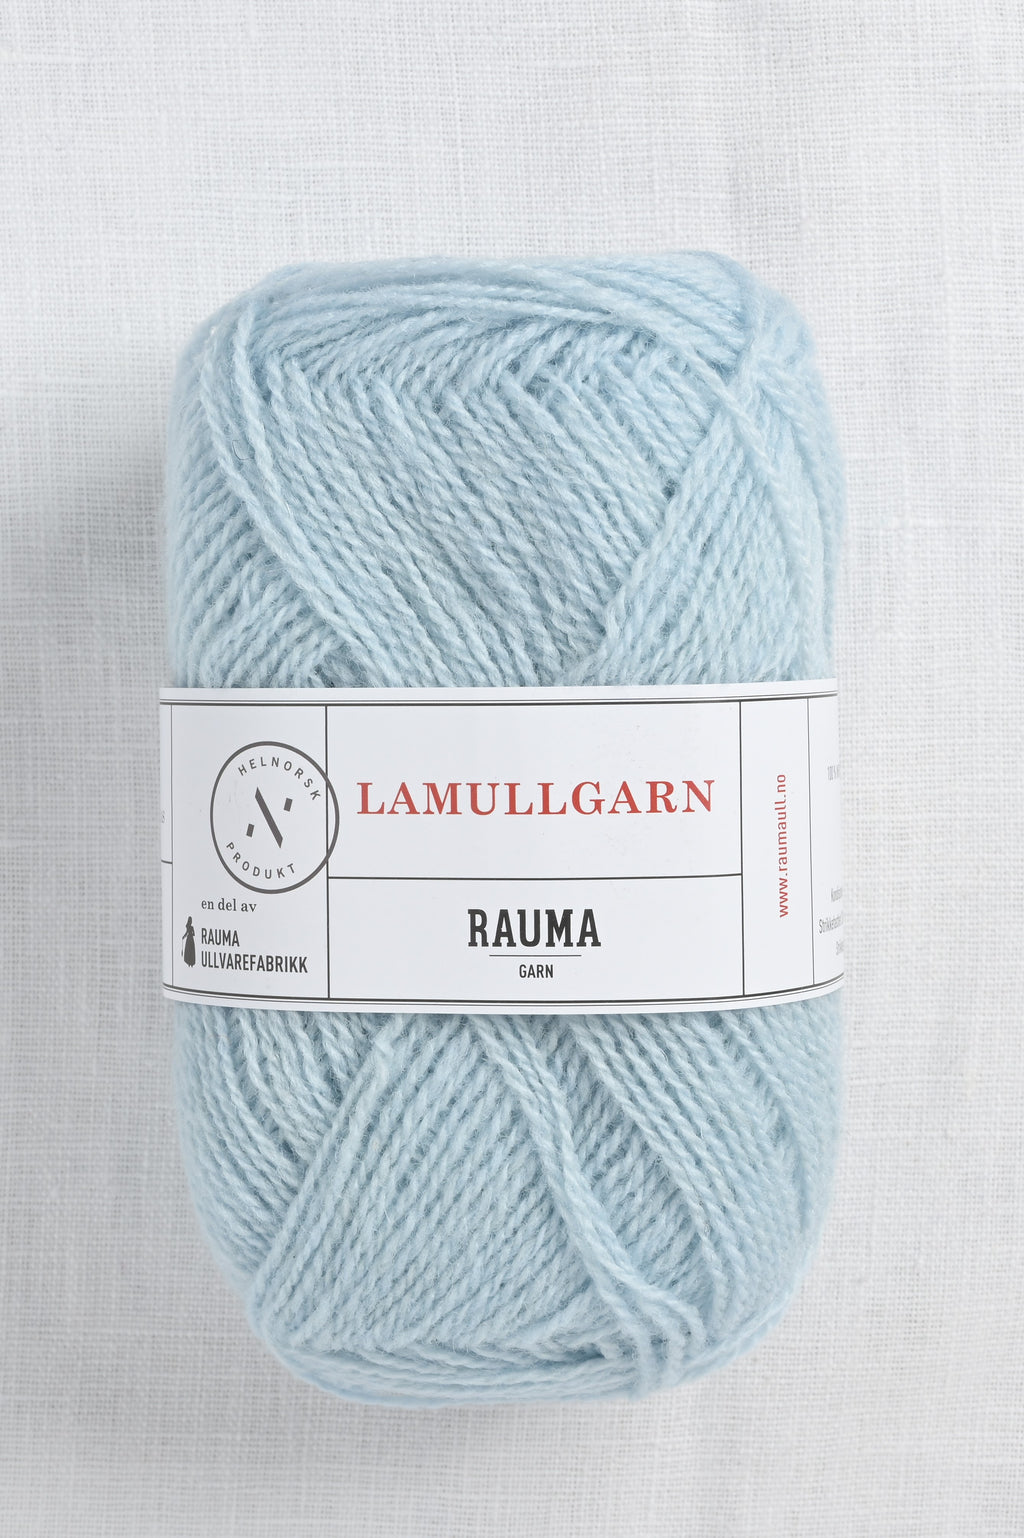 Rauma 2-Ply Lamullgarn 22 Light Blue